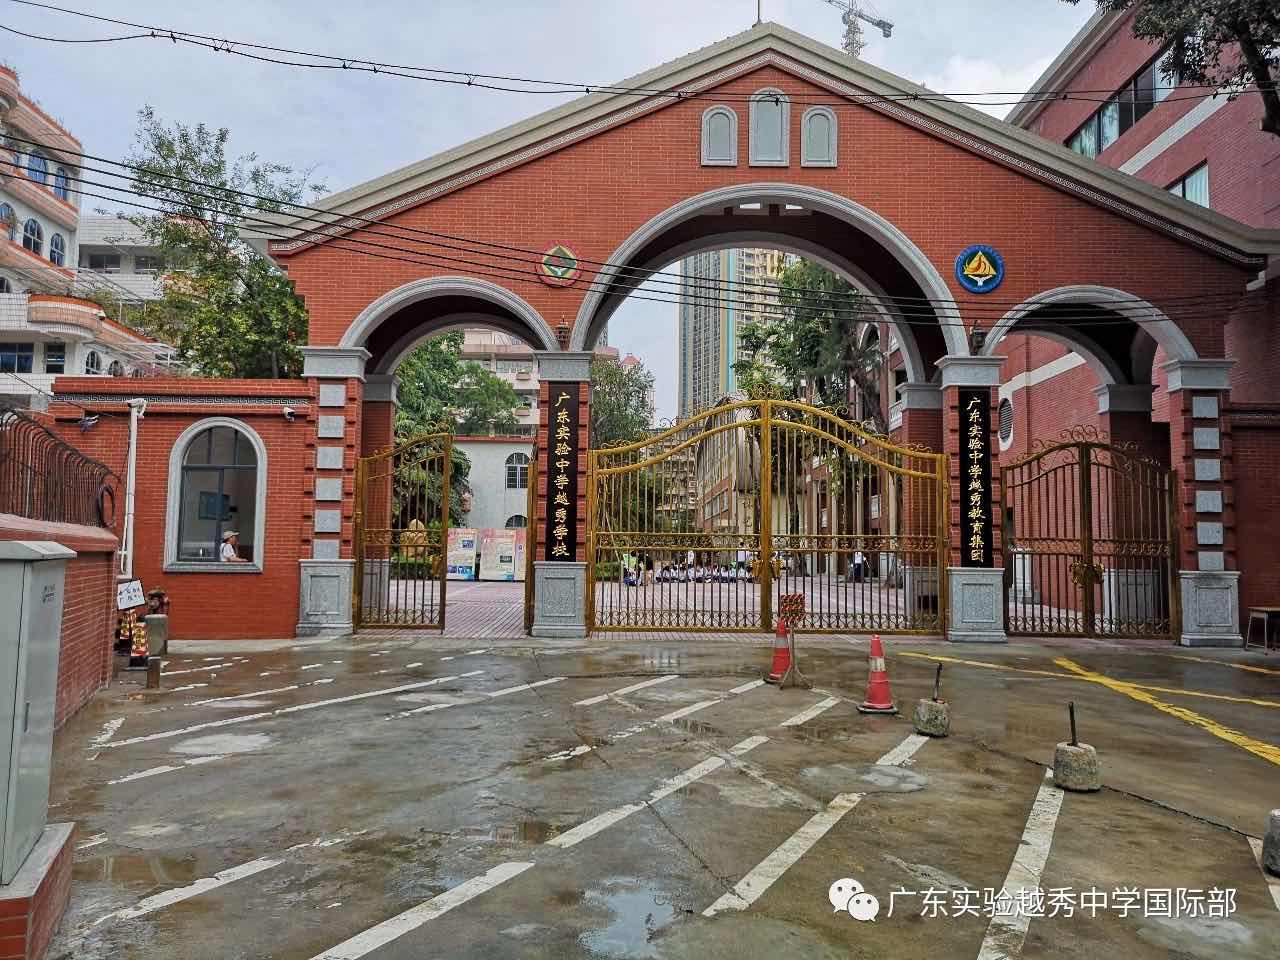 guangzhou hengxin education investment & development company